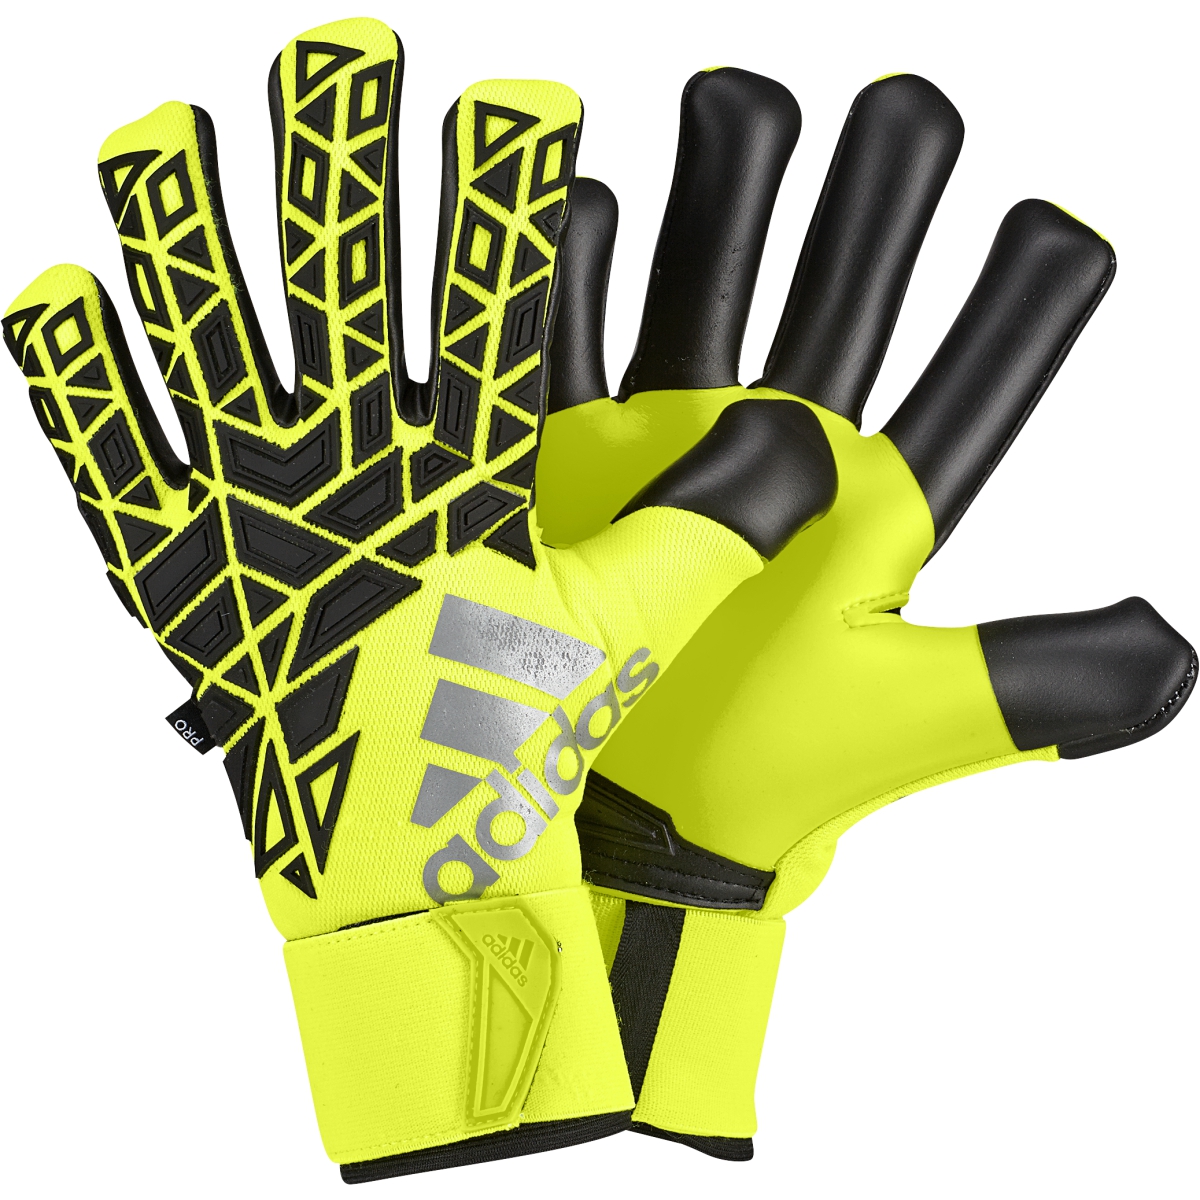 ace trans pro goalkeeper gloves